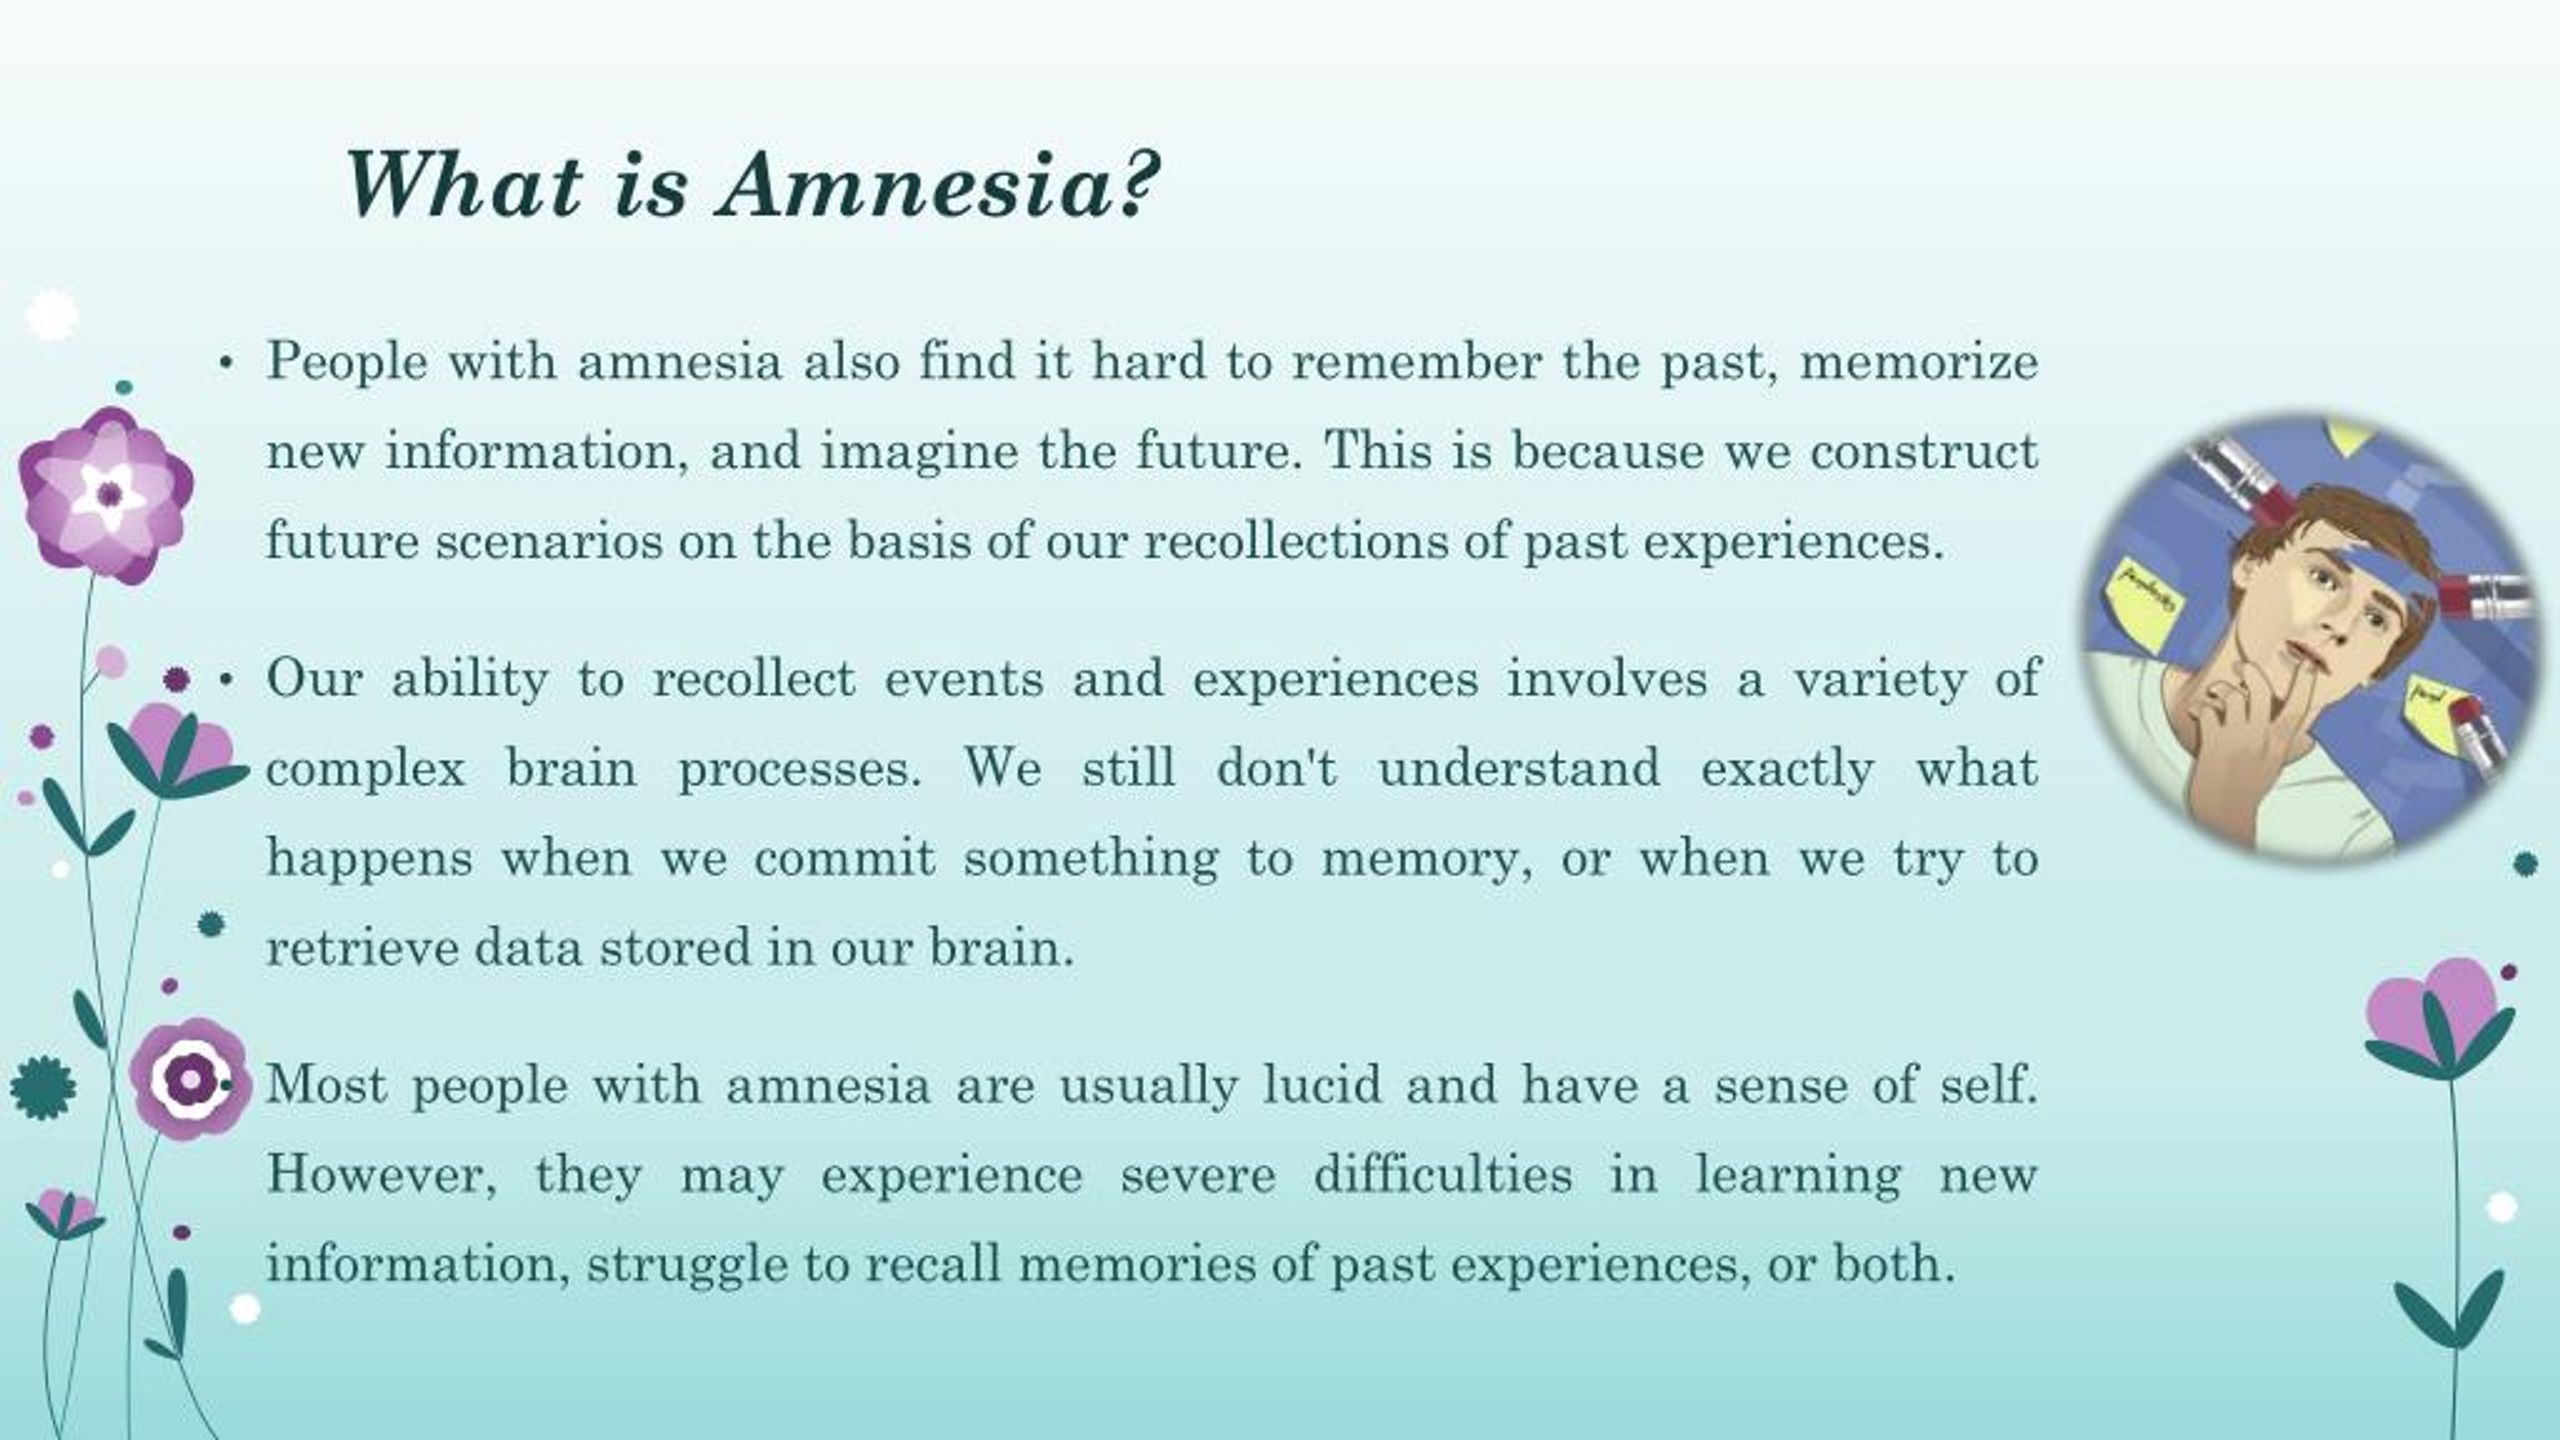 self induced amnesia